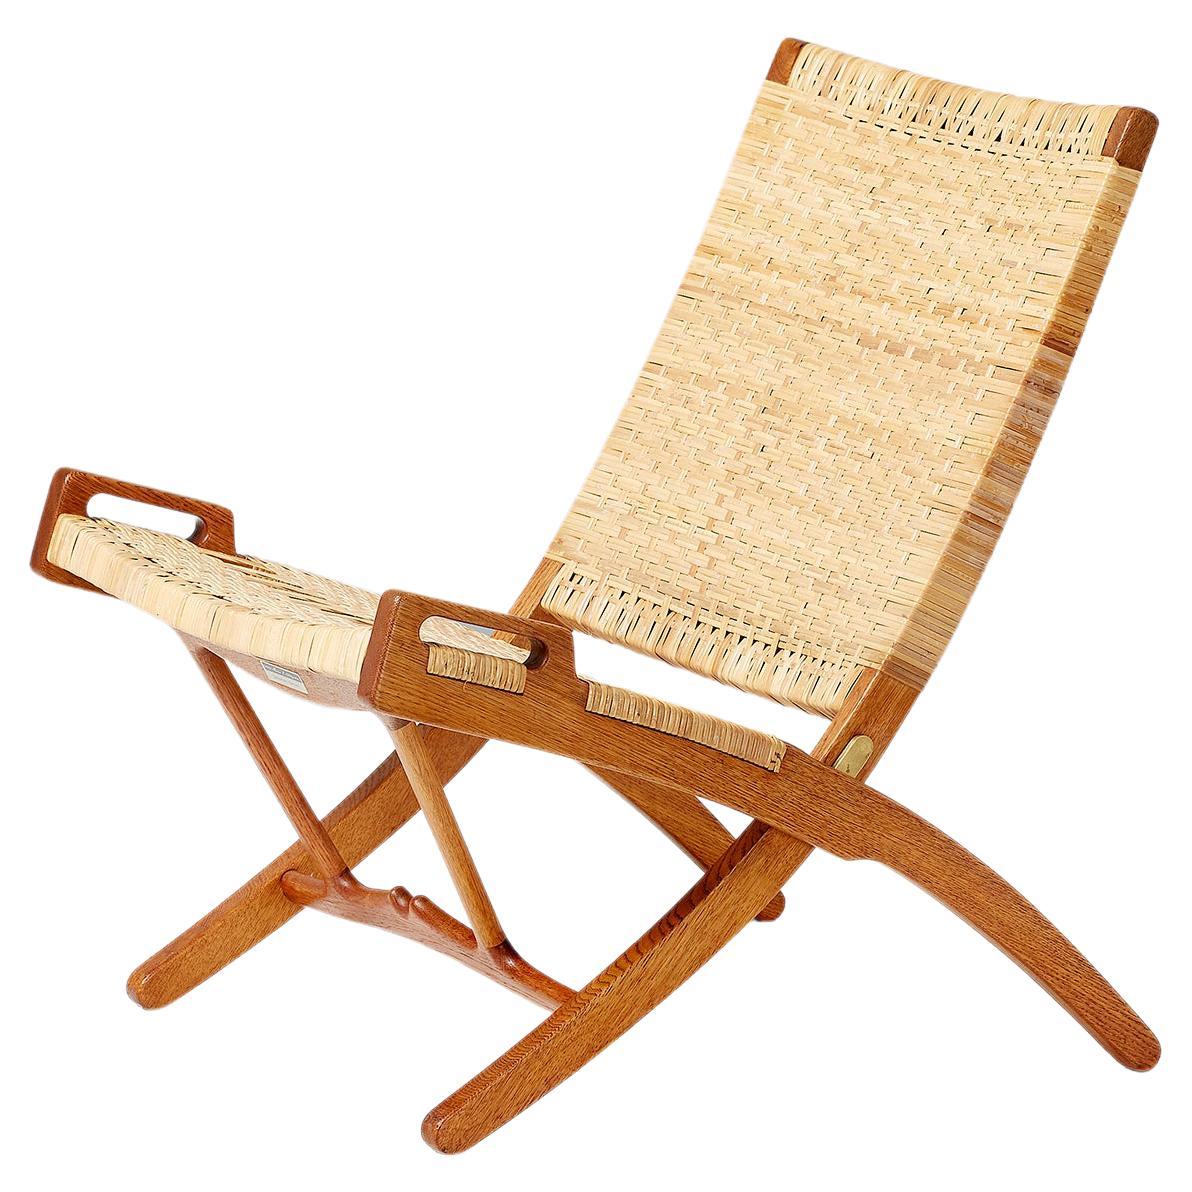 Hans Wegner JH-512 Oak Folding Chair, c. 1950s